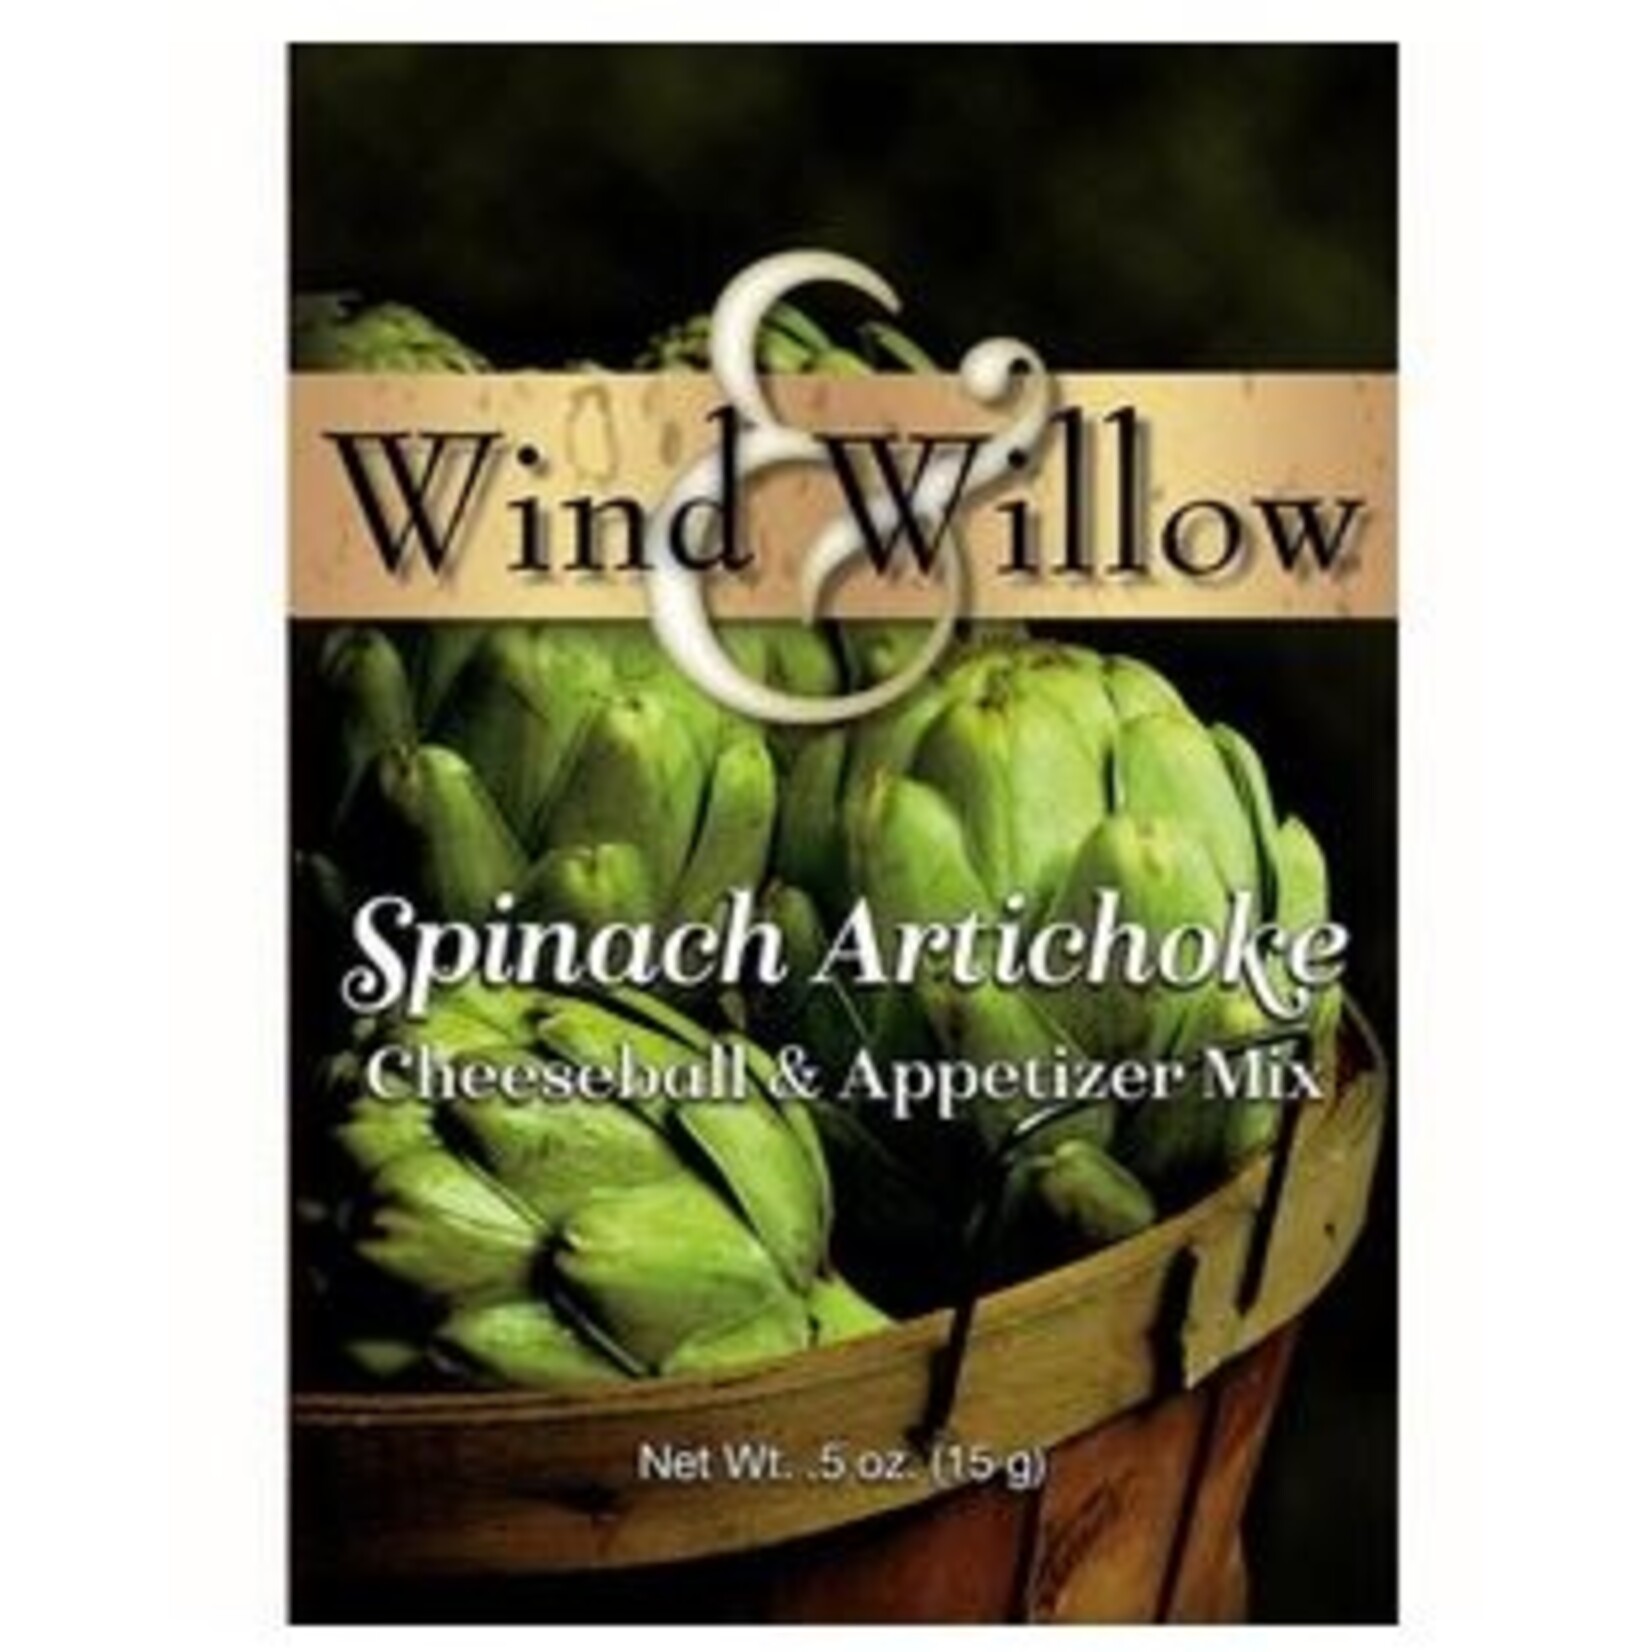 Wind & Willow Spinach Artichoke Cheeseball & Appetizer Mix